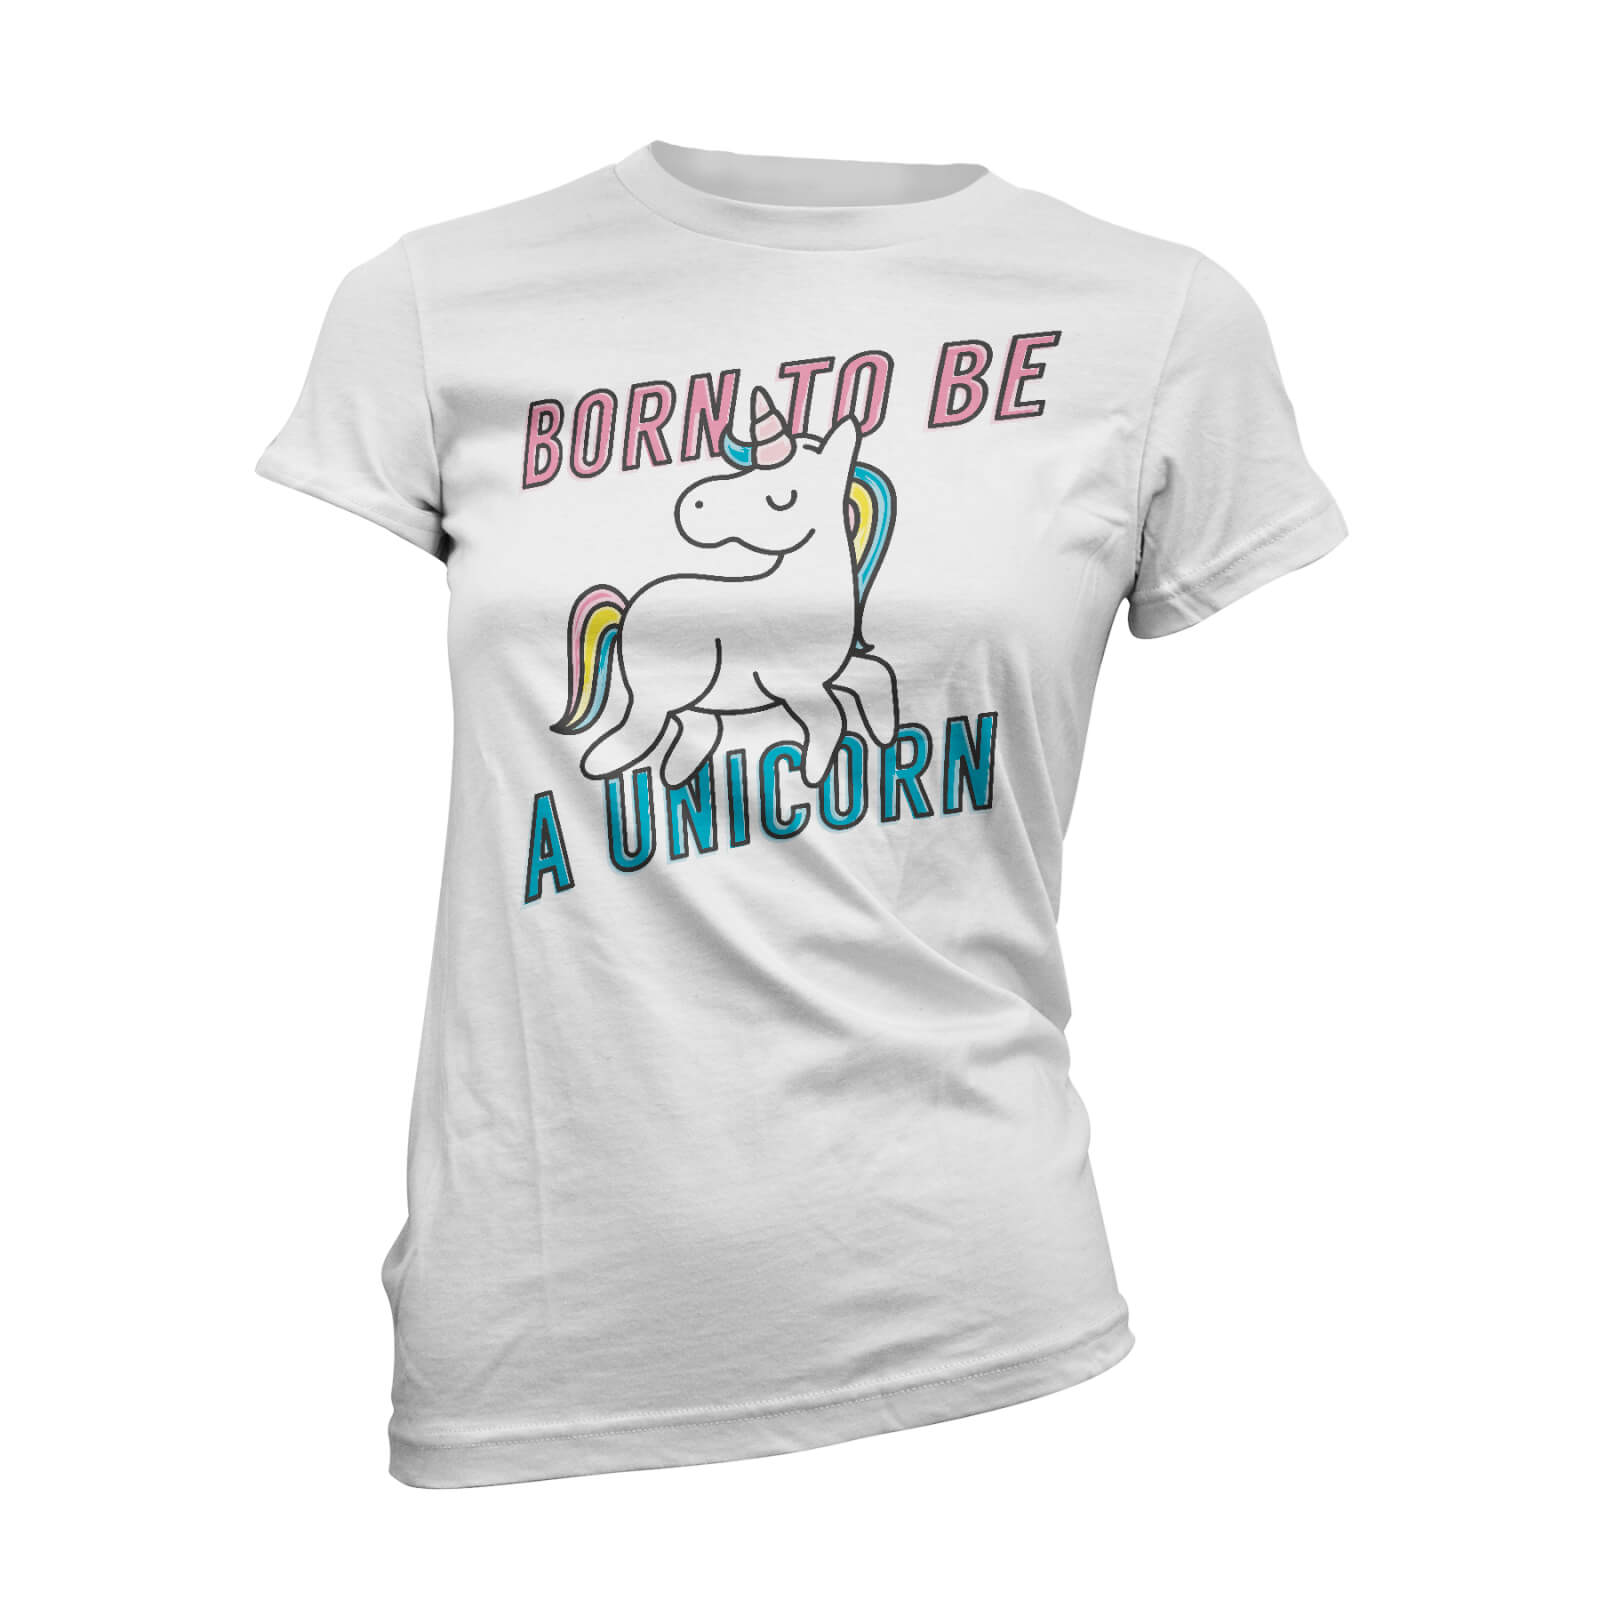 Born To Be A Unicorn Women's White T-Shirt - S - White